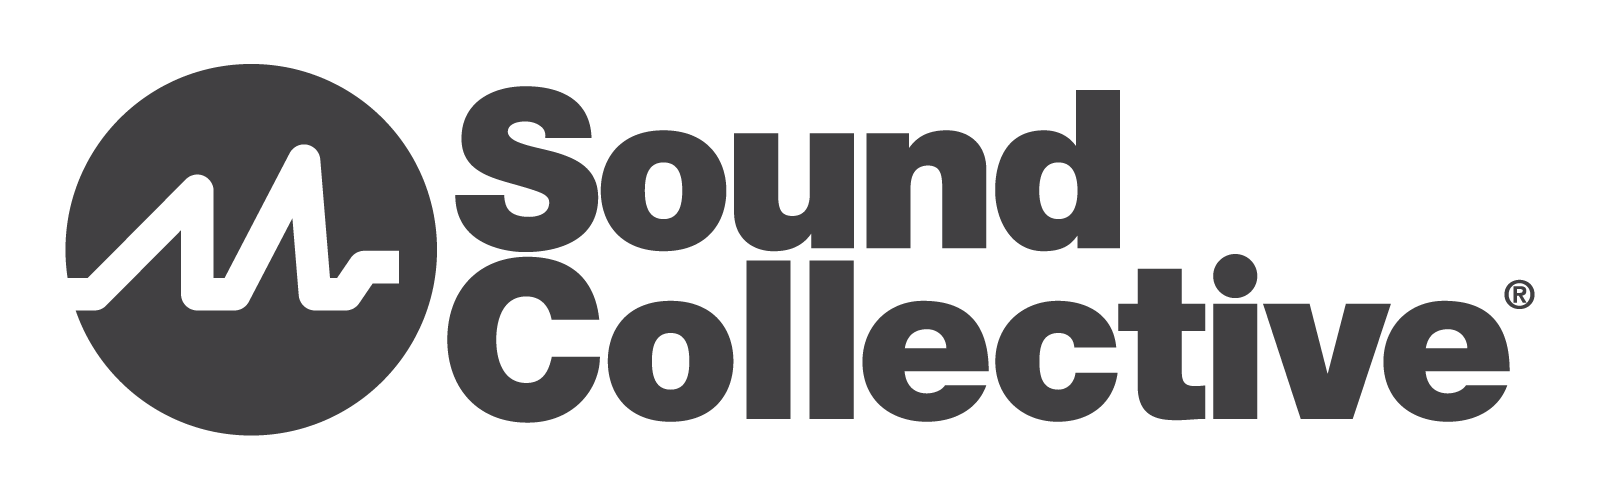 Sound Collective,SoundCollective,collective school of music,Community,sound better, Home Page (SC-WEB V2 Draft), SoundCollective